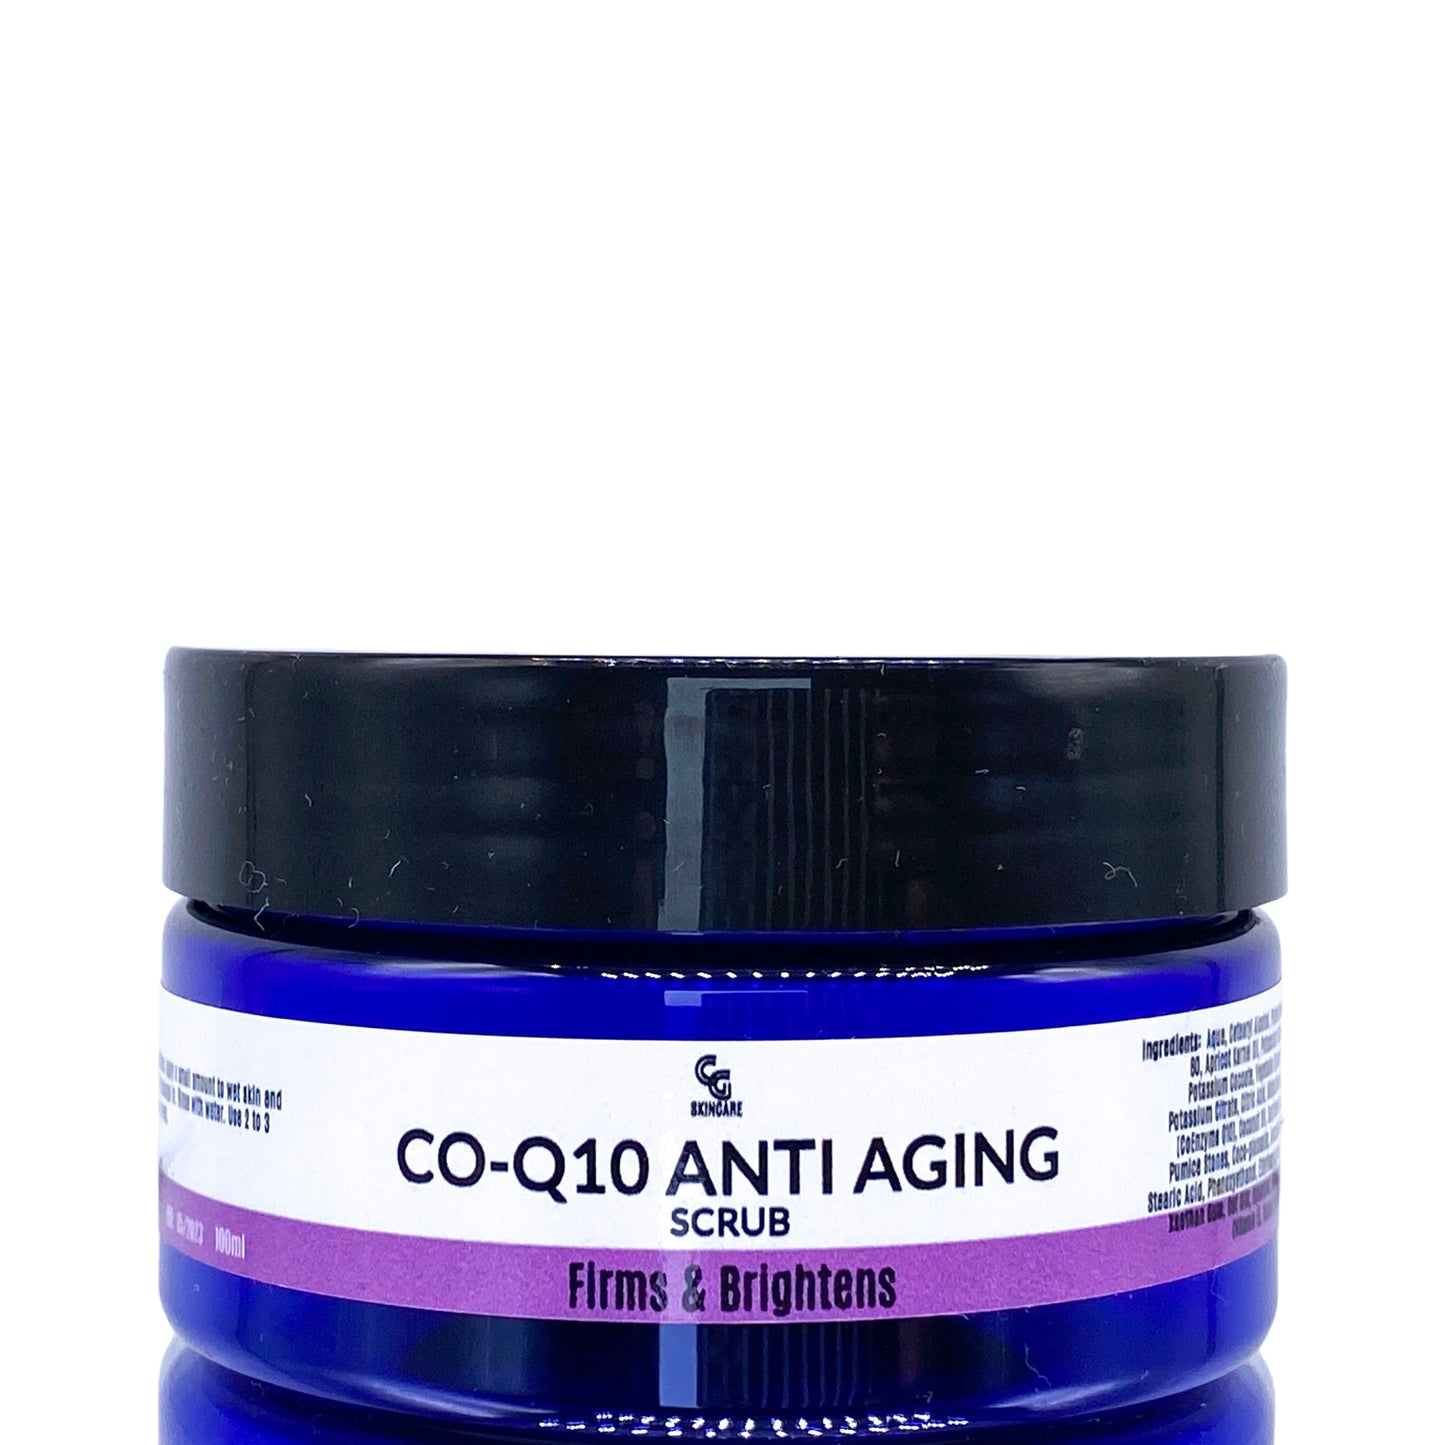 Co-Q10 Anti Aging Scrub